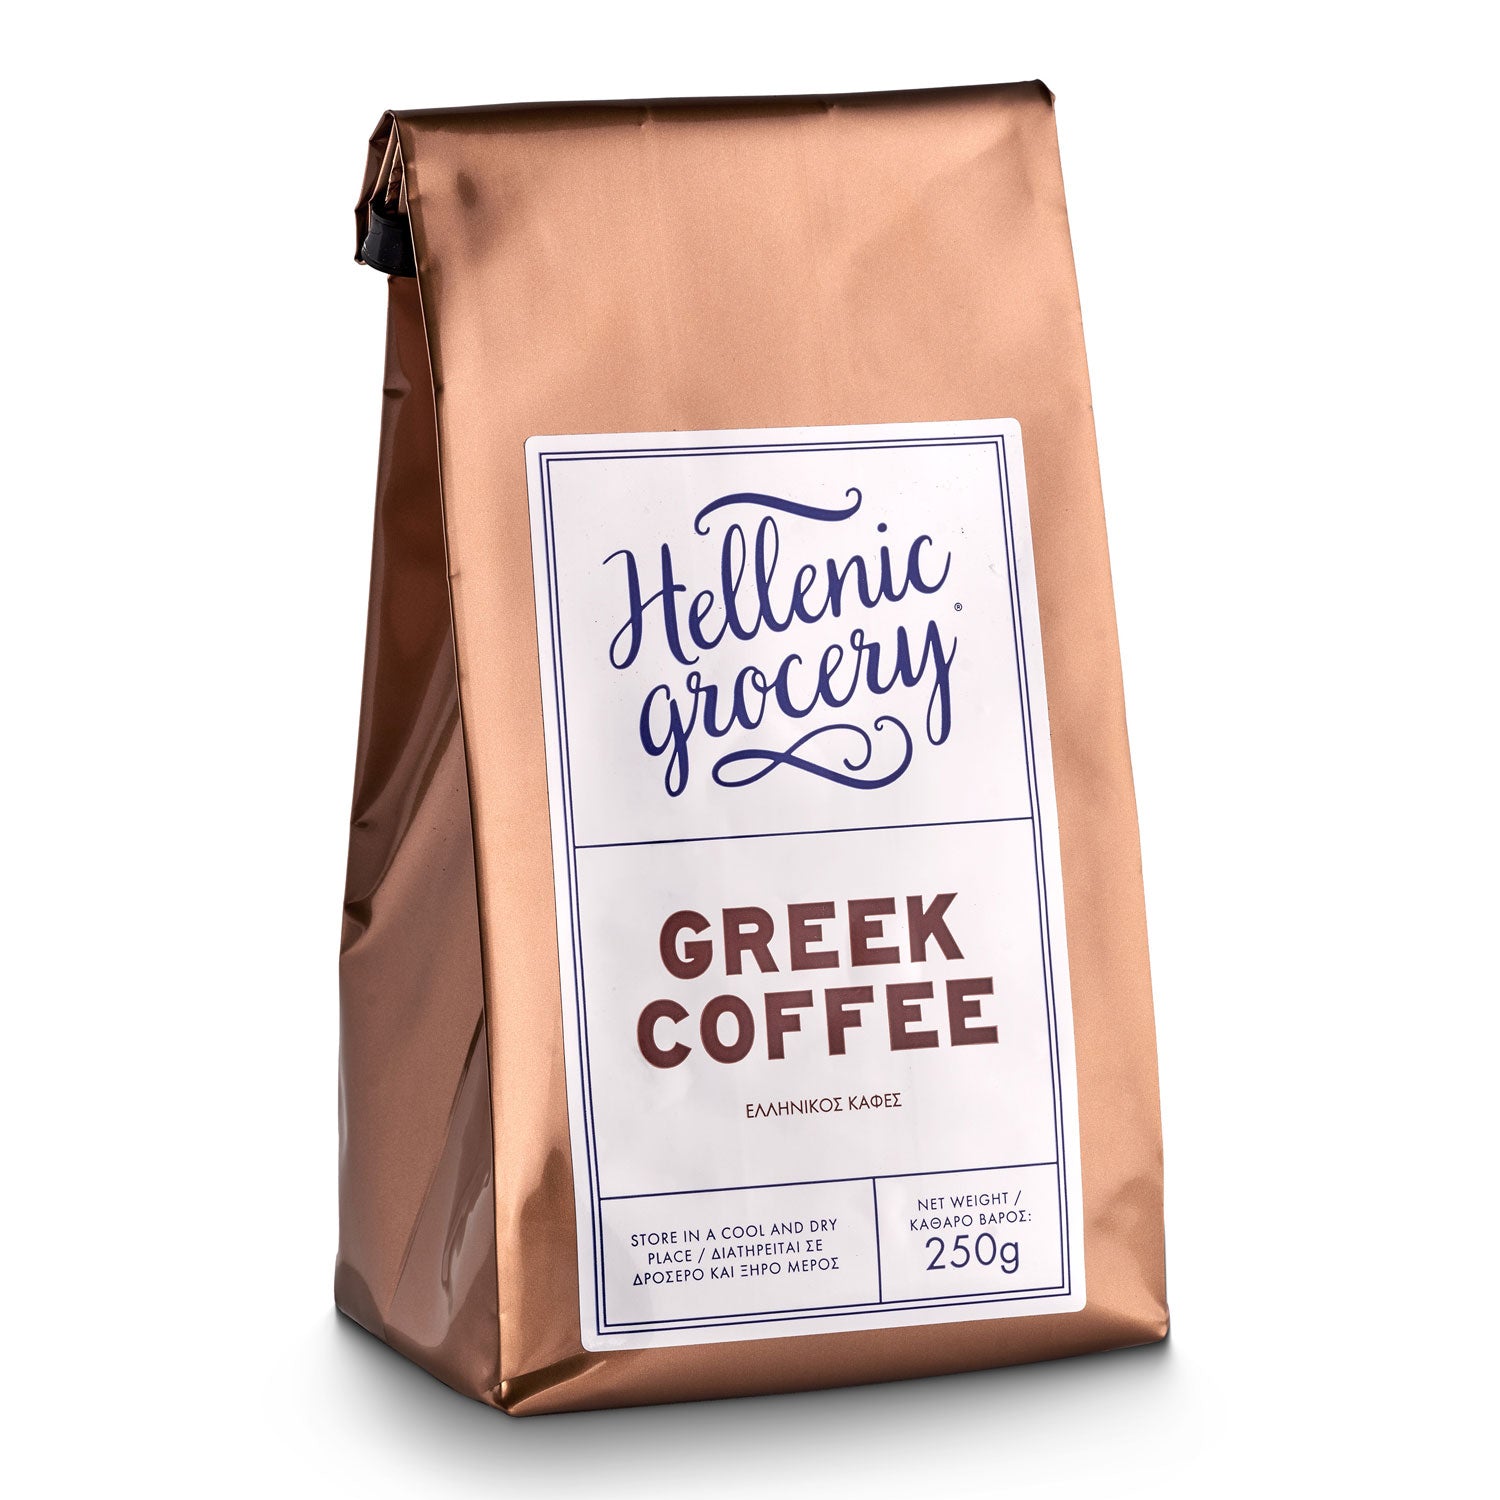 Caffè Greco Tradizionale - 250g - Hellenic Grocery